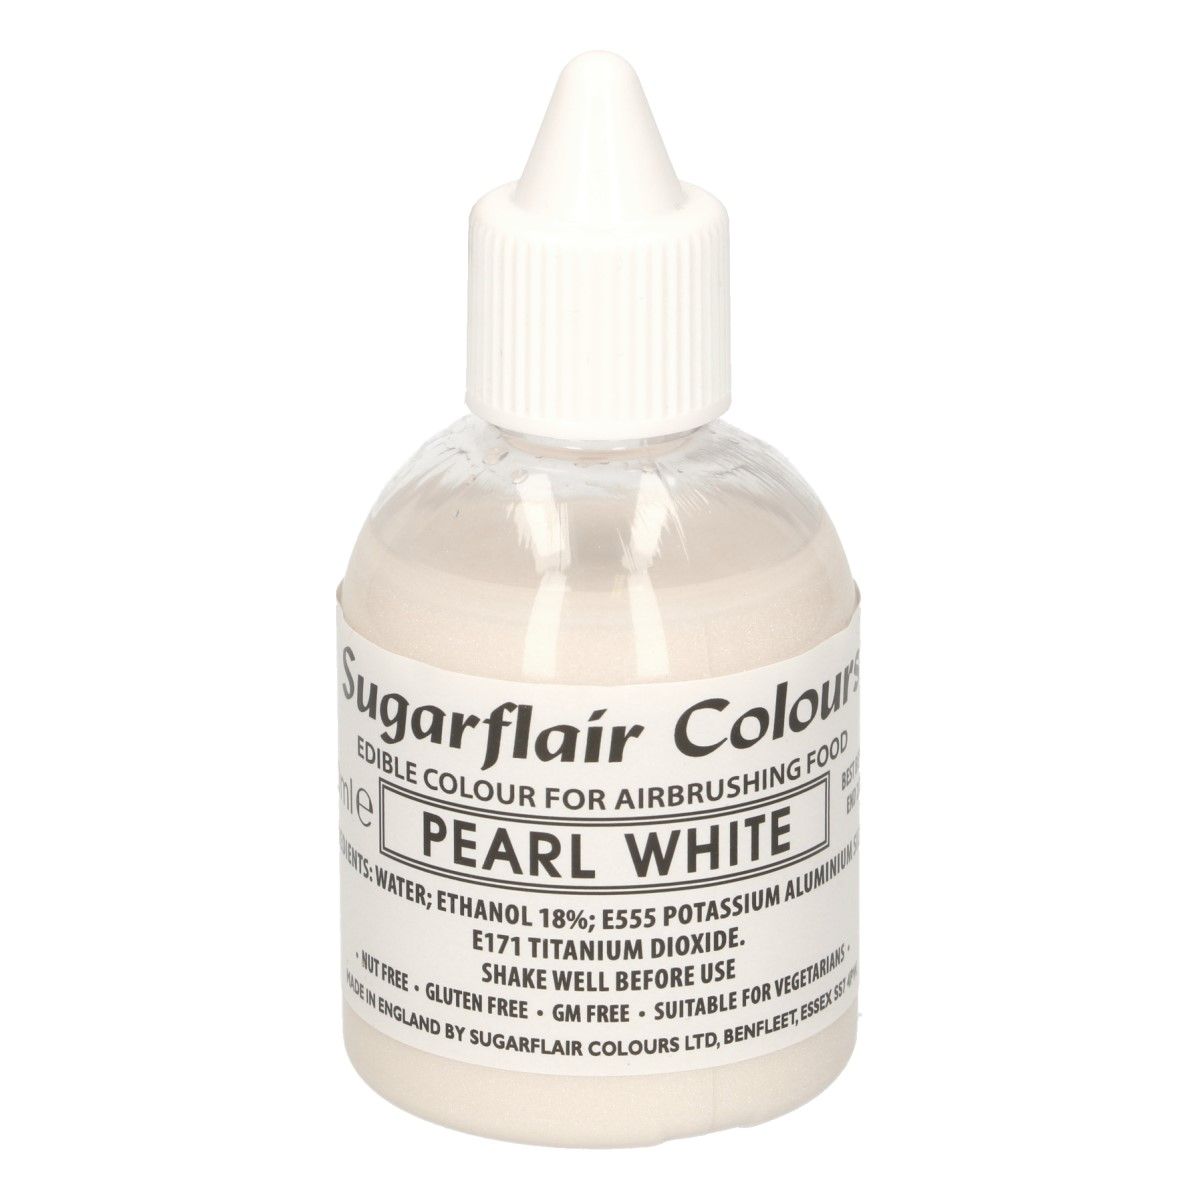 Sugarflair GLITTER PEARL WHITE, biela potravinárska airbrush farba, 60ml